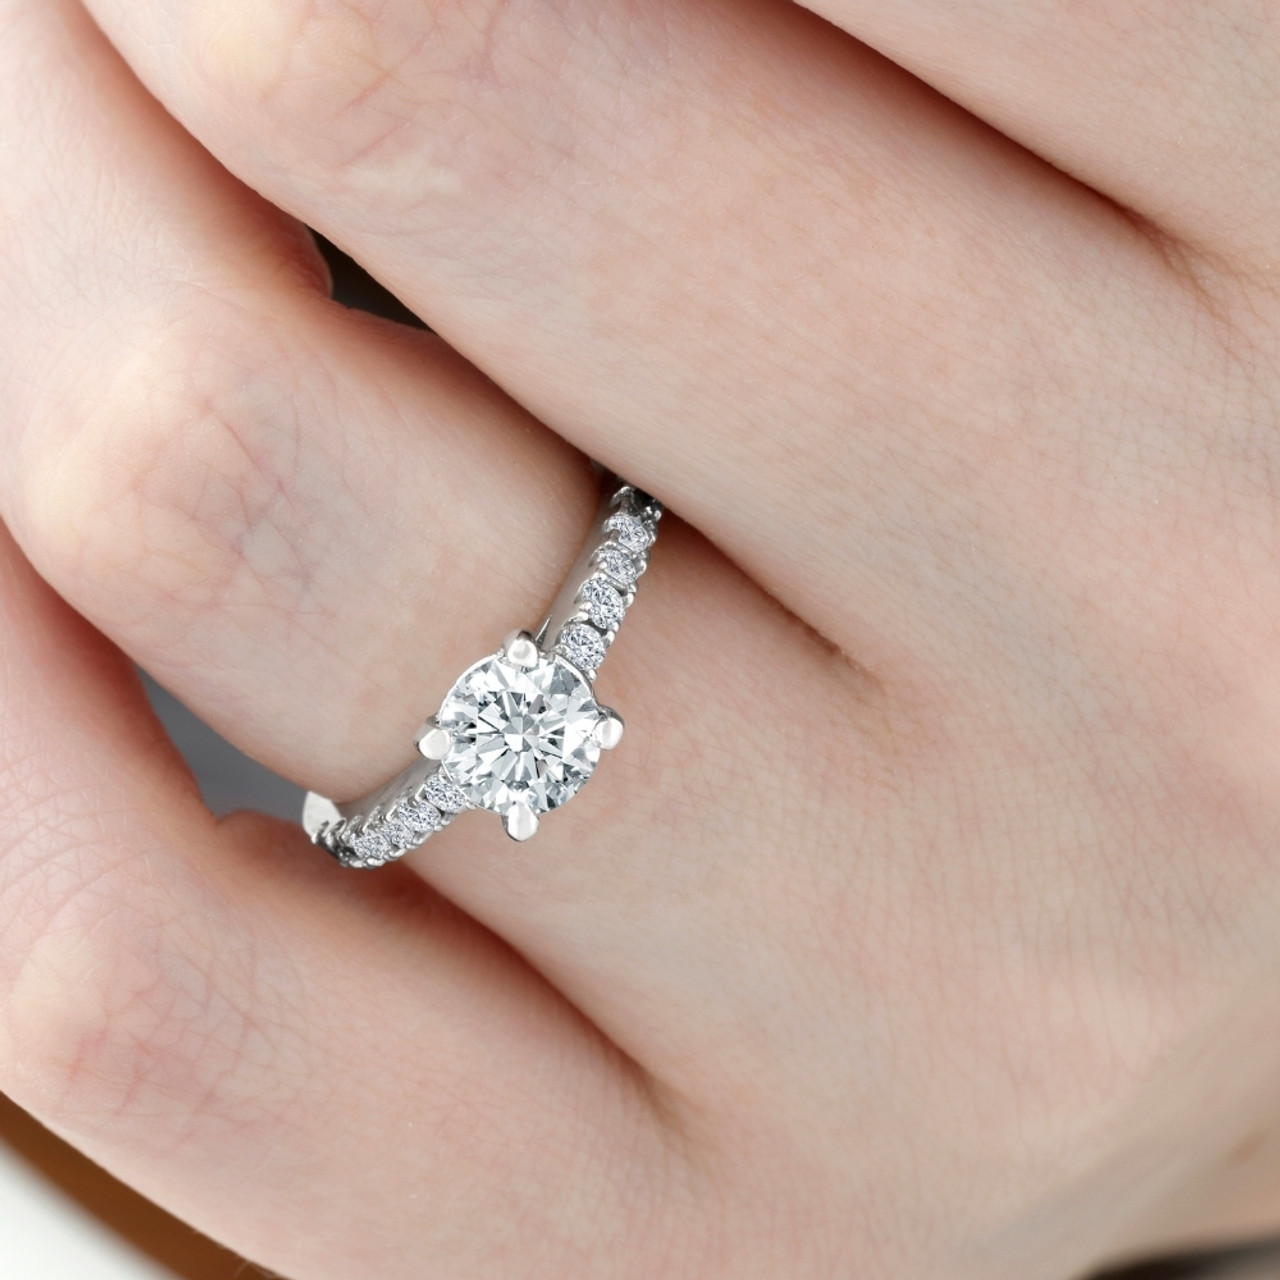 Diamond engagement ring in 14K white gold